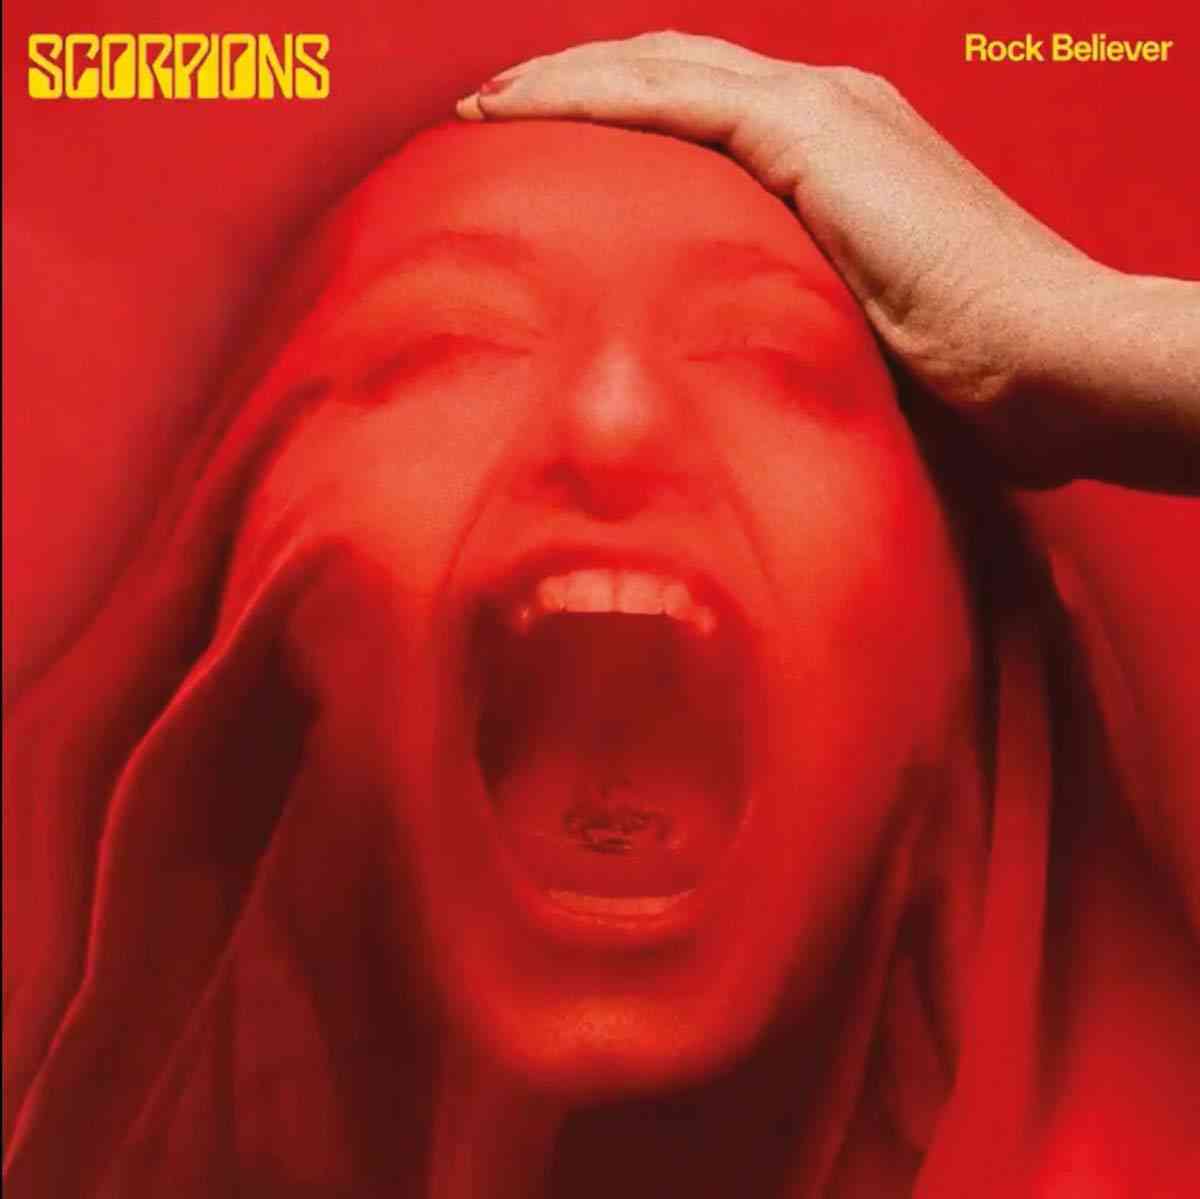 scorpions - rock believer - album cover